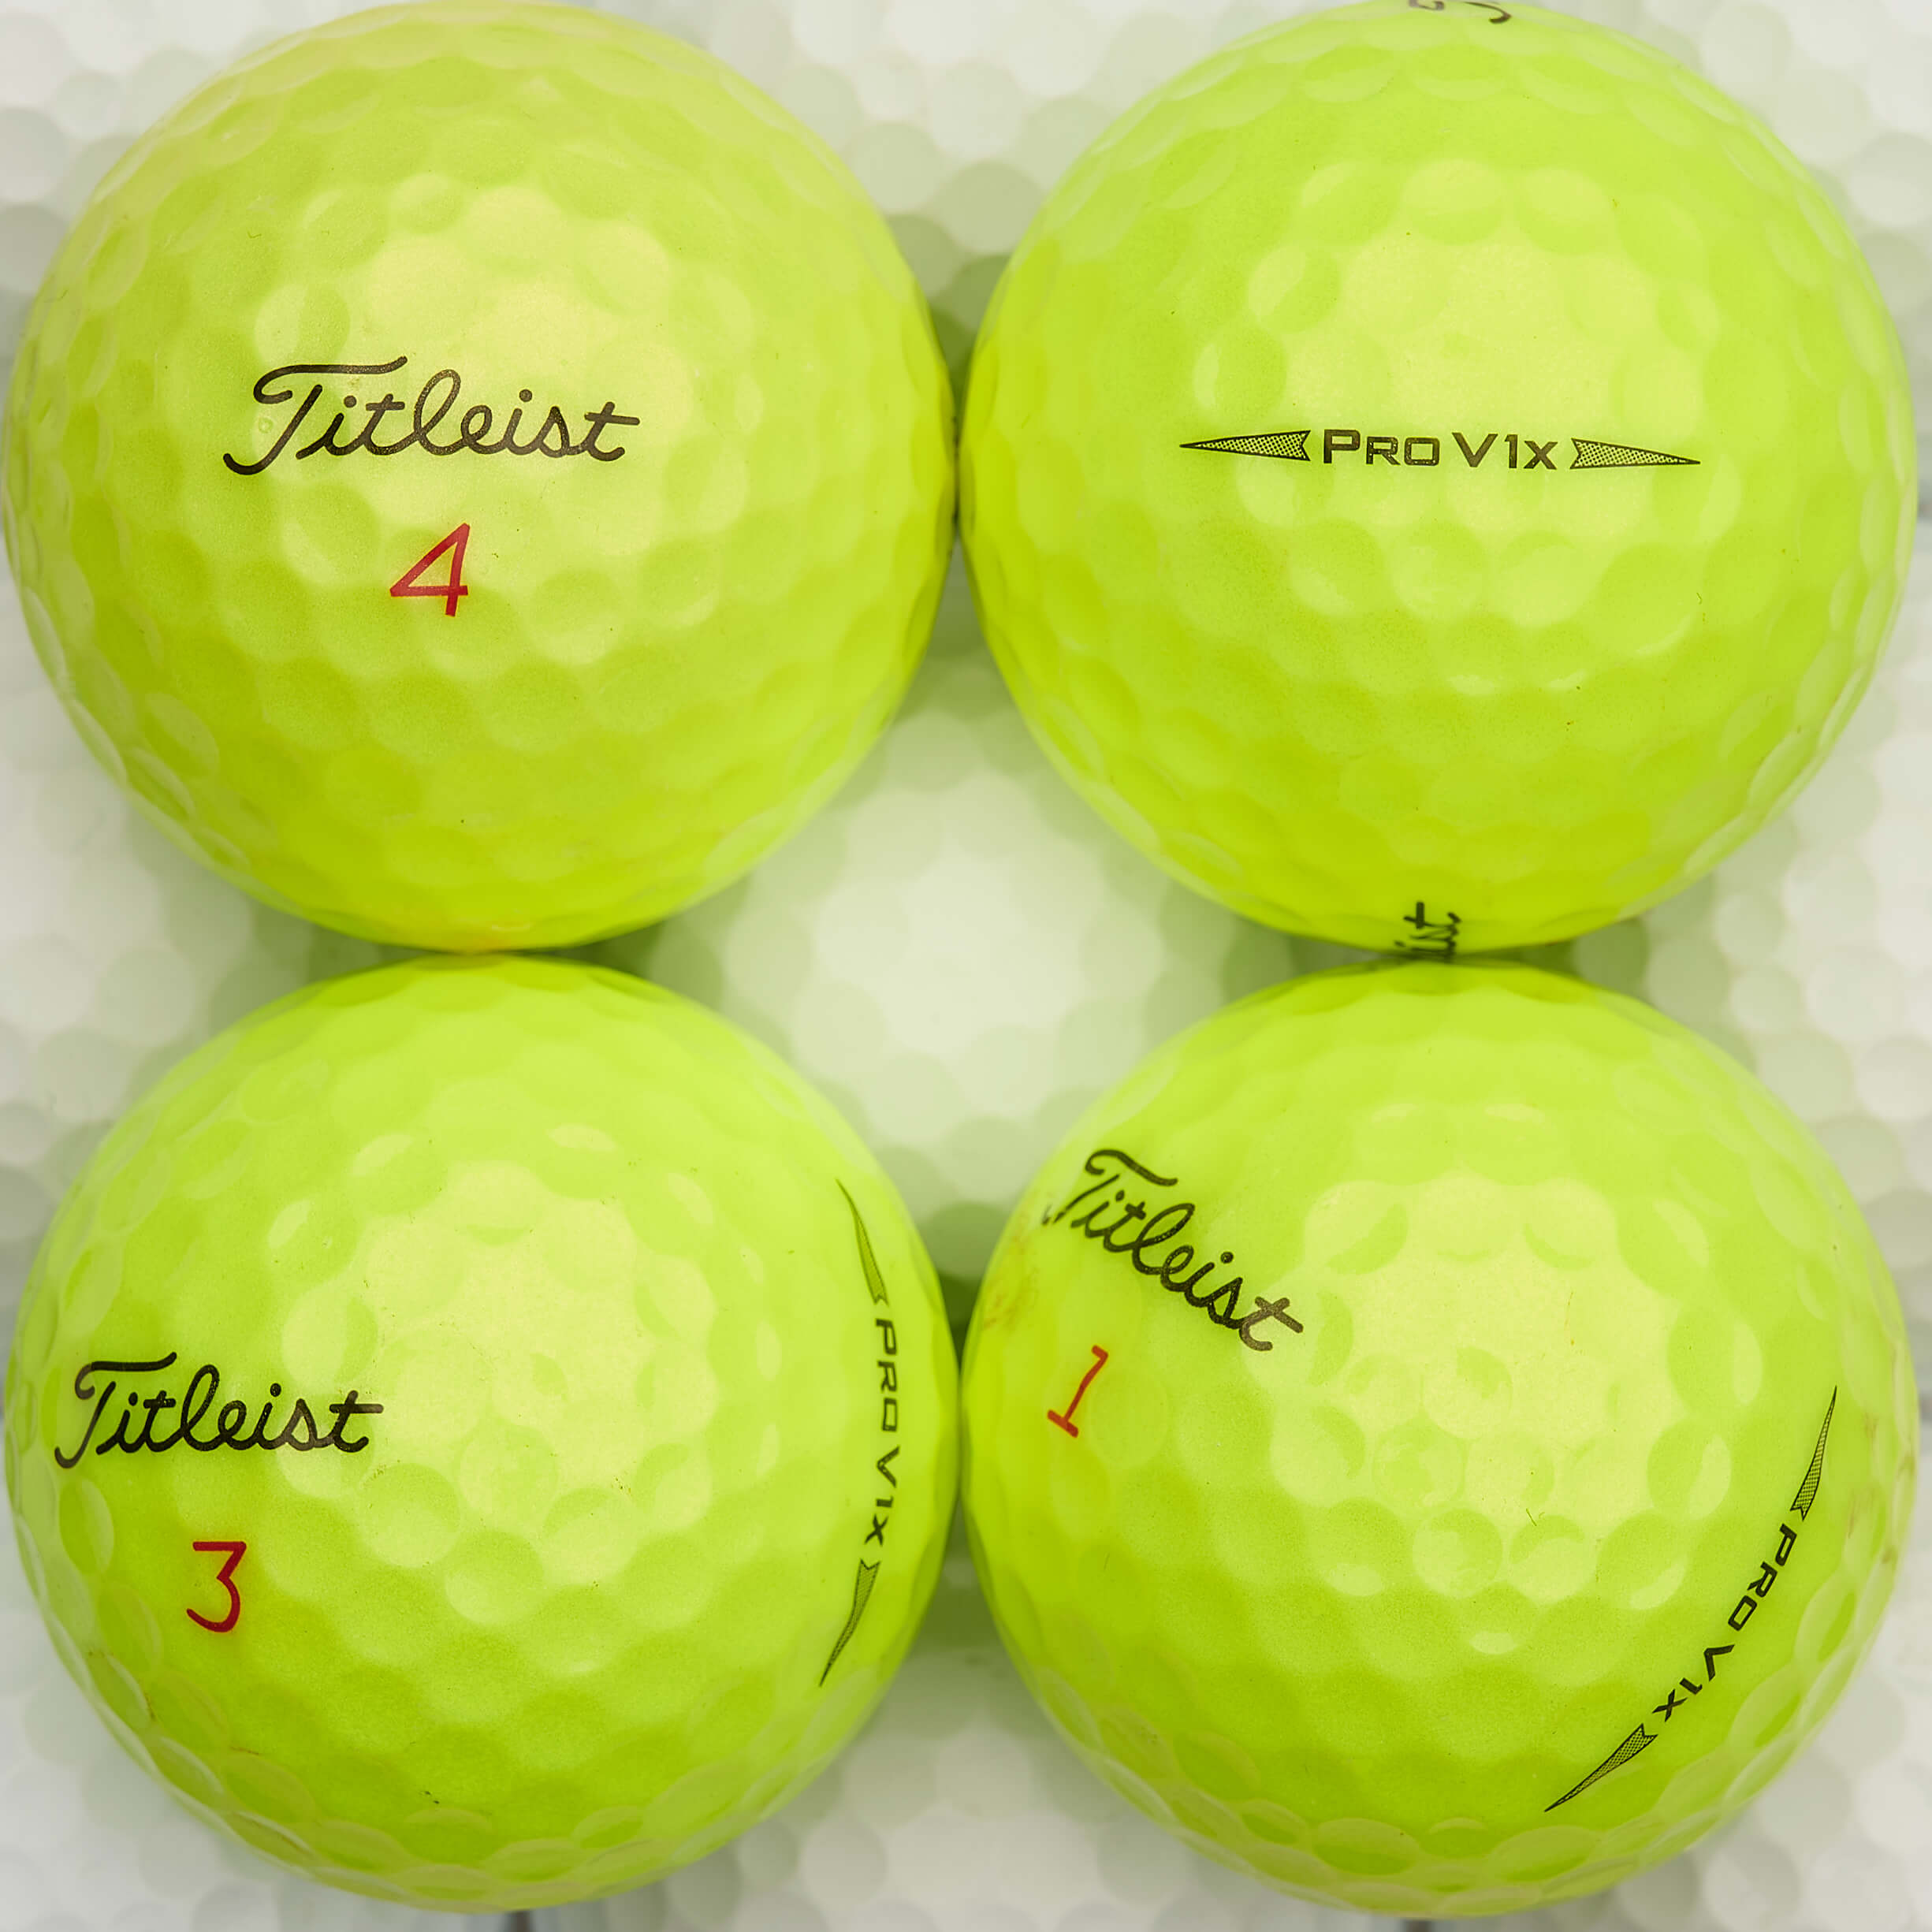 25 Titleist Pro V1x Lakeballs, yellow